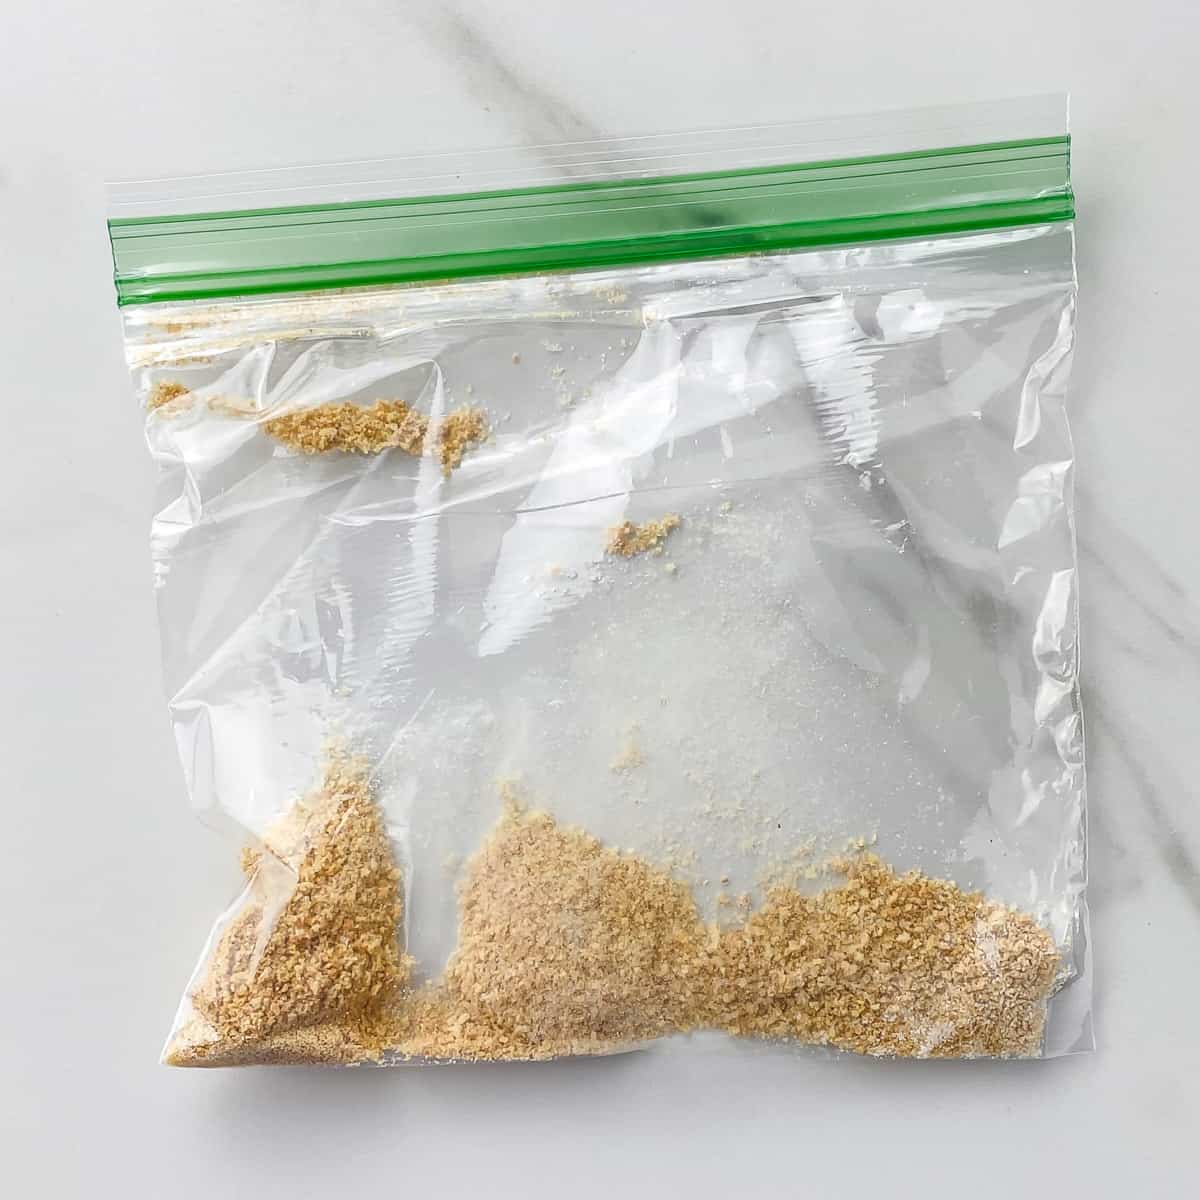 crushed graham cracker in a plastic bag